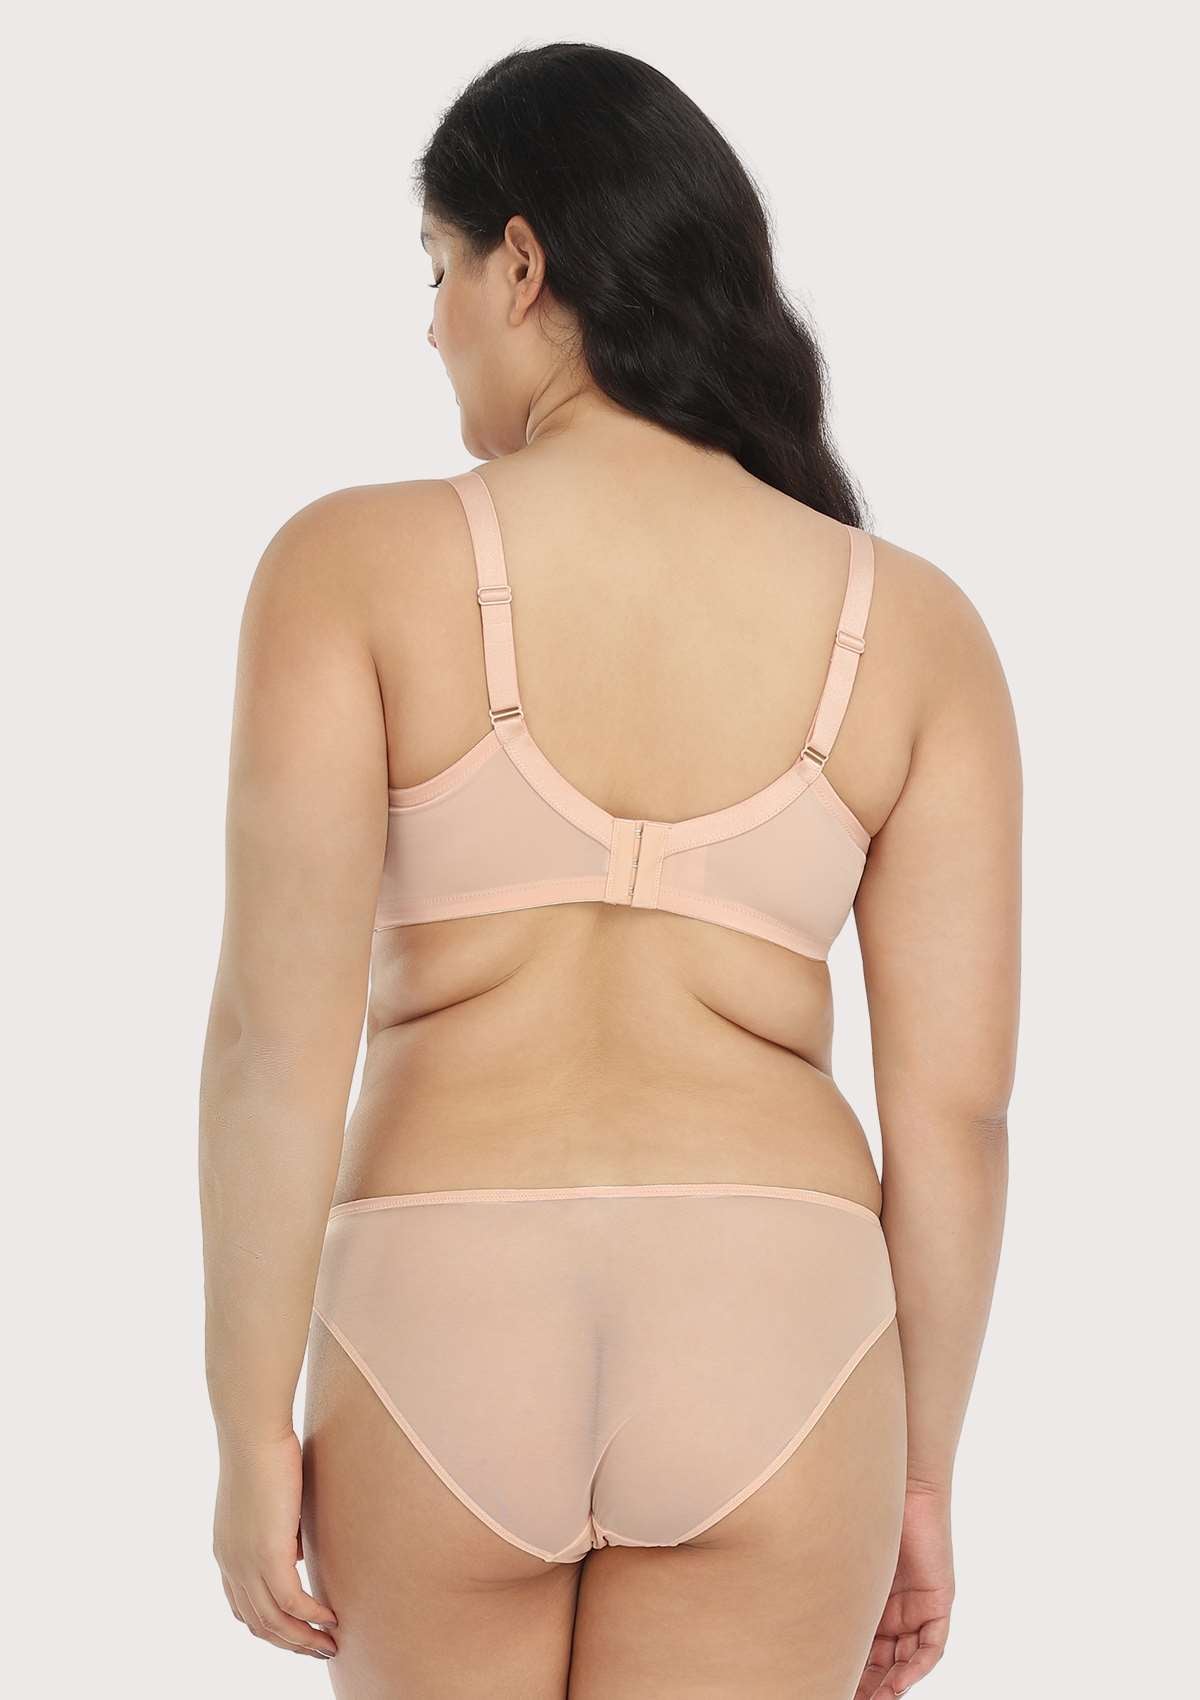 HSIA Sunflower Matching Bra And Panties Set: Comfortable Plus Size Bra - Pink / 46 / DD/E